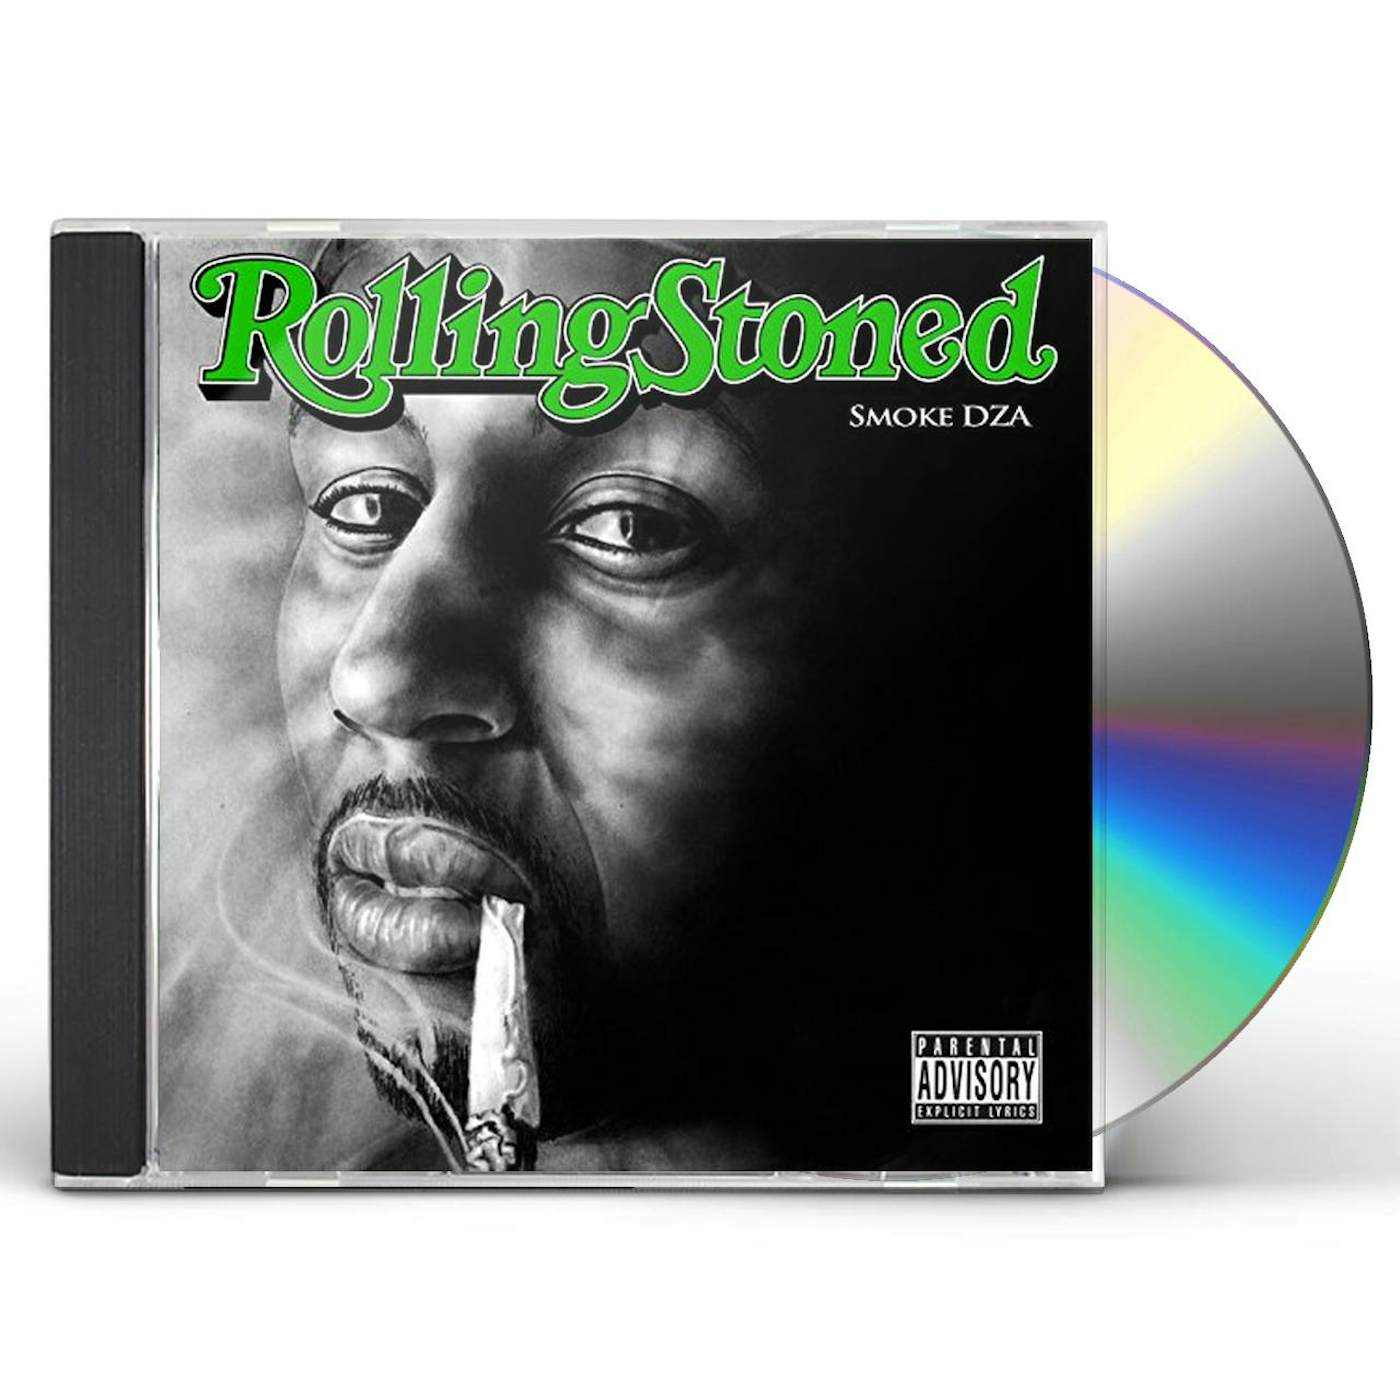 Smoke DZA ROLLING STONED CD